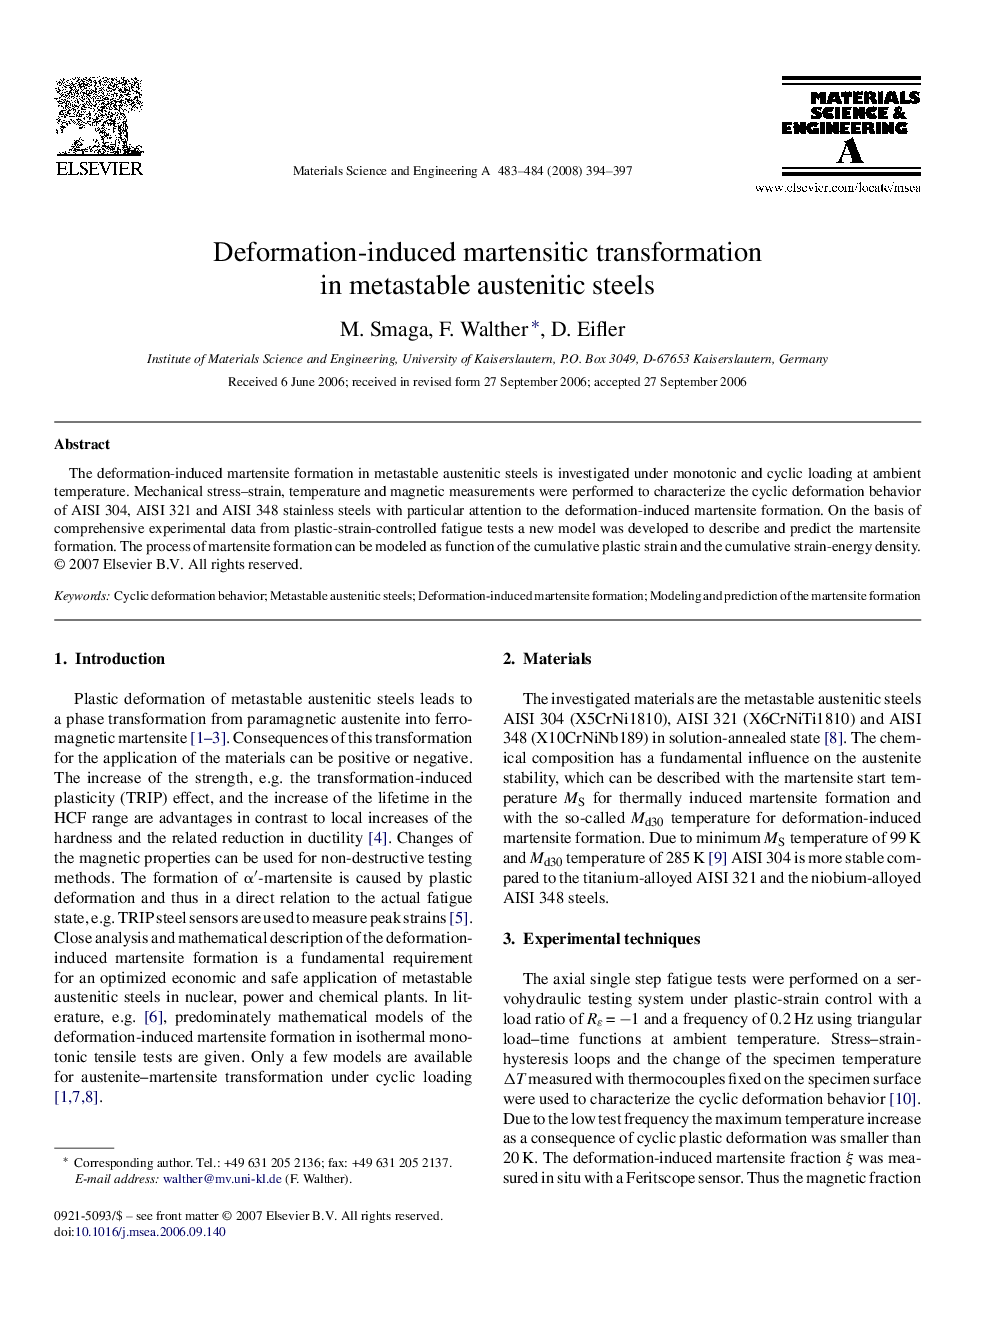 Deformation-induced martensitic transformation in metastable austenitic steels